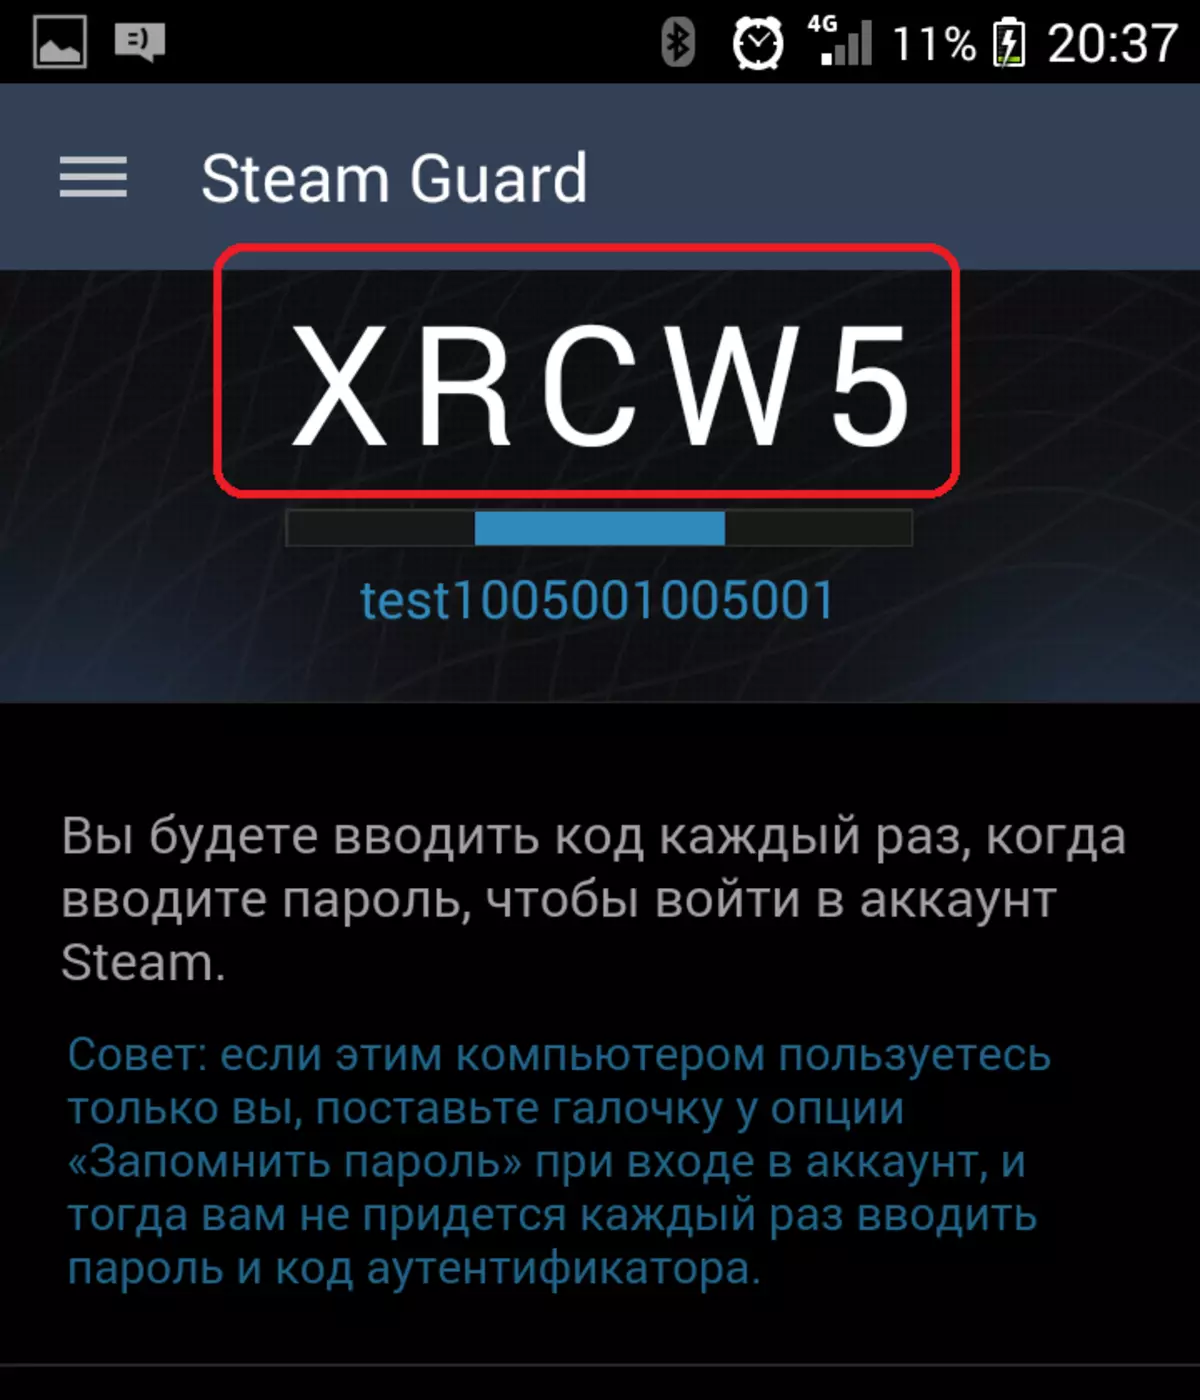 Steam Guard Code